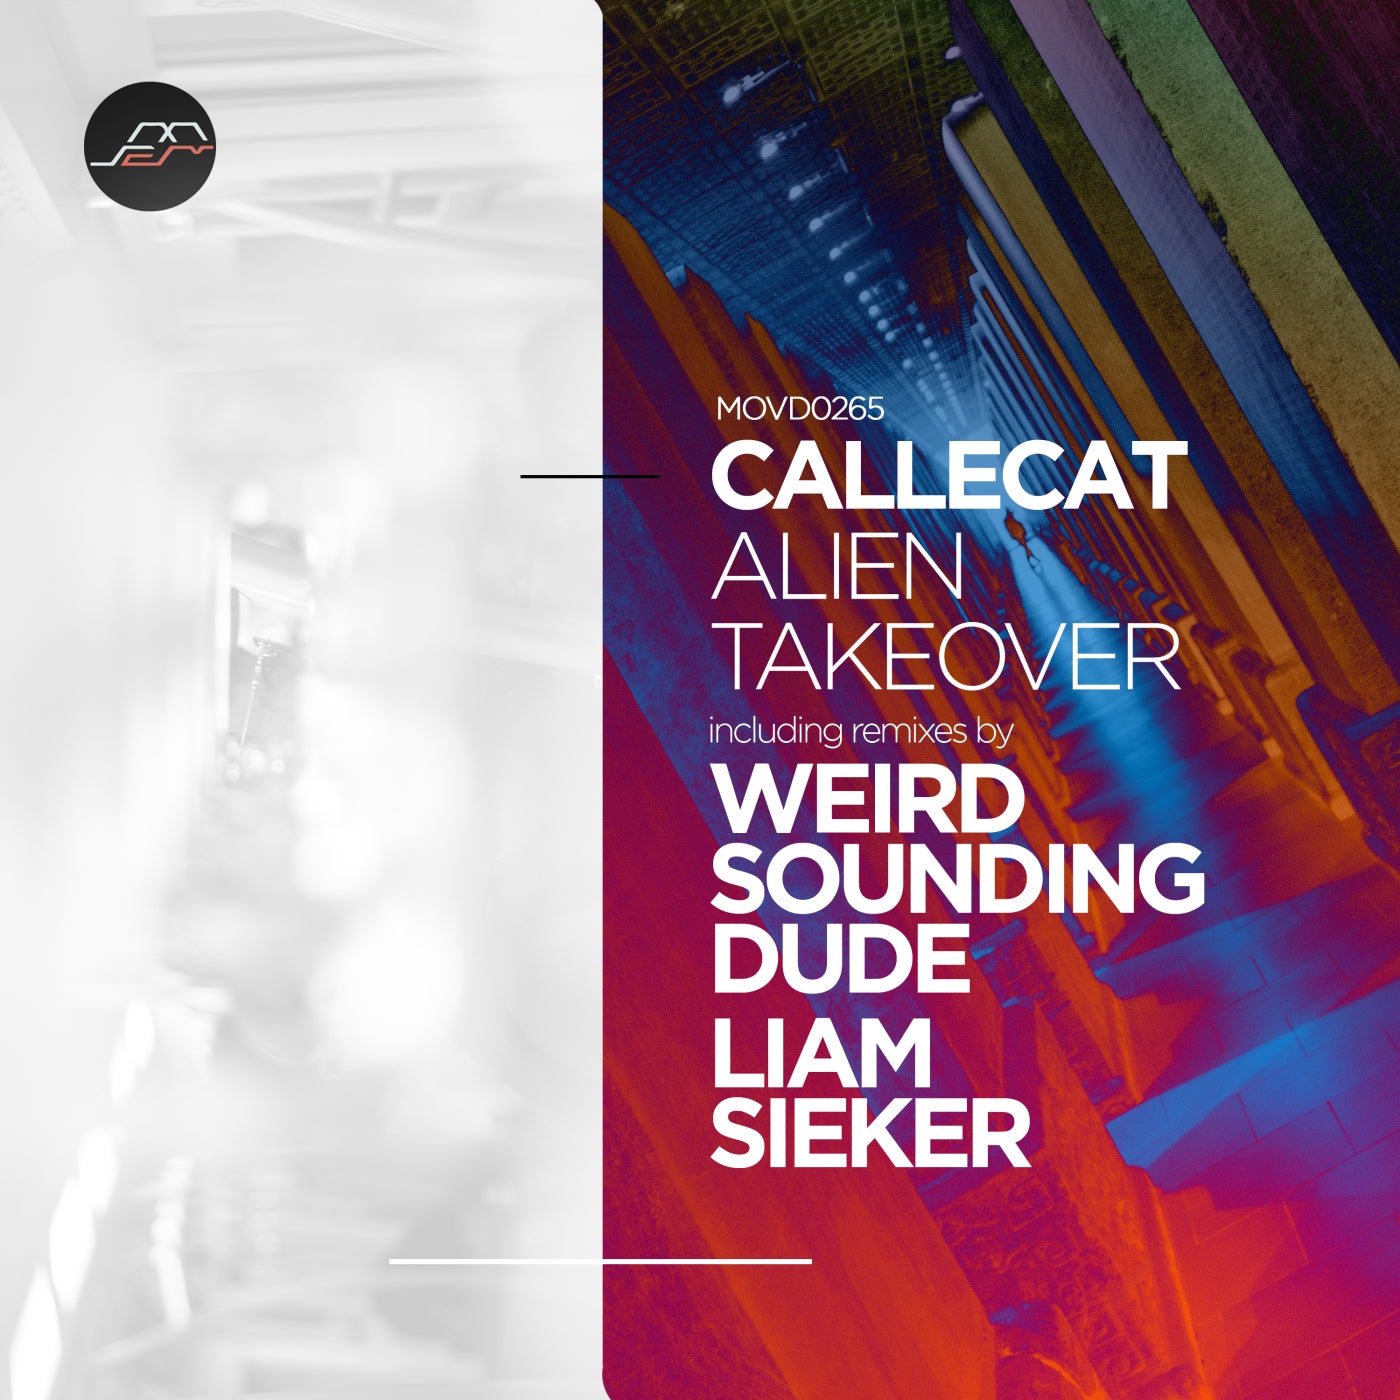 Callecat, Weird Sounding Dude – Alien Takeover [MOVD0265]